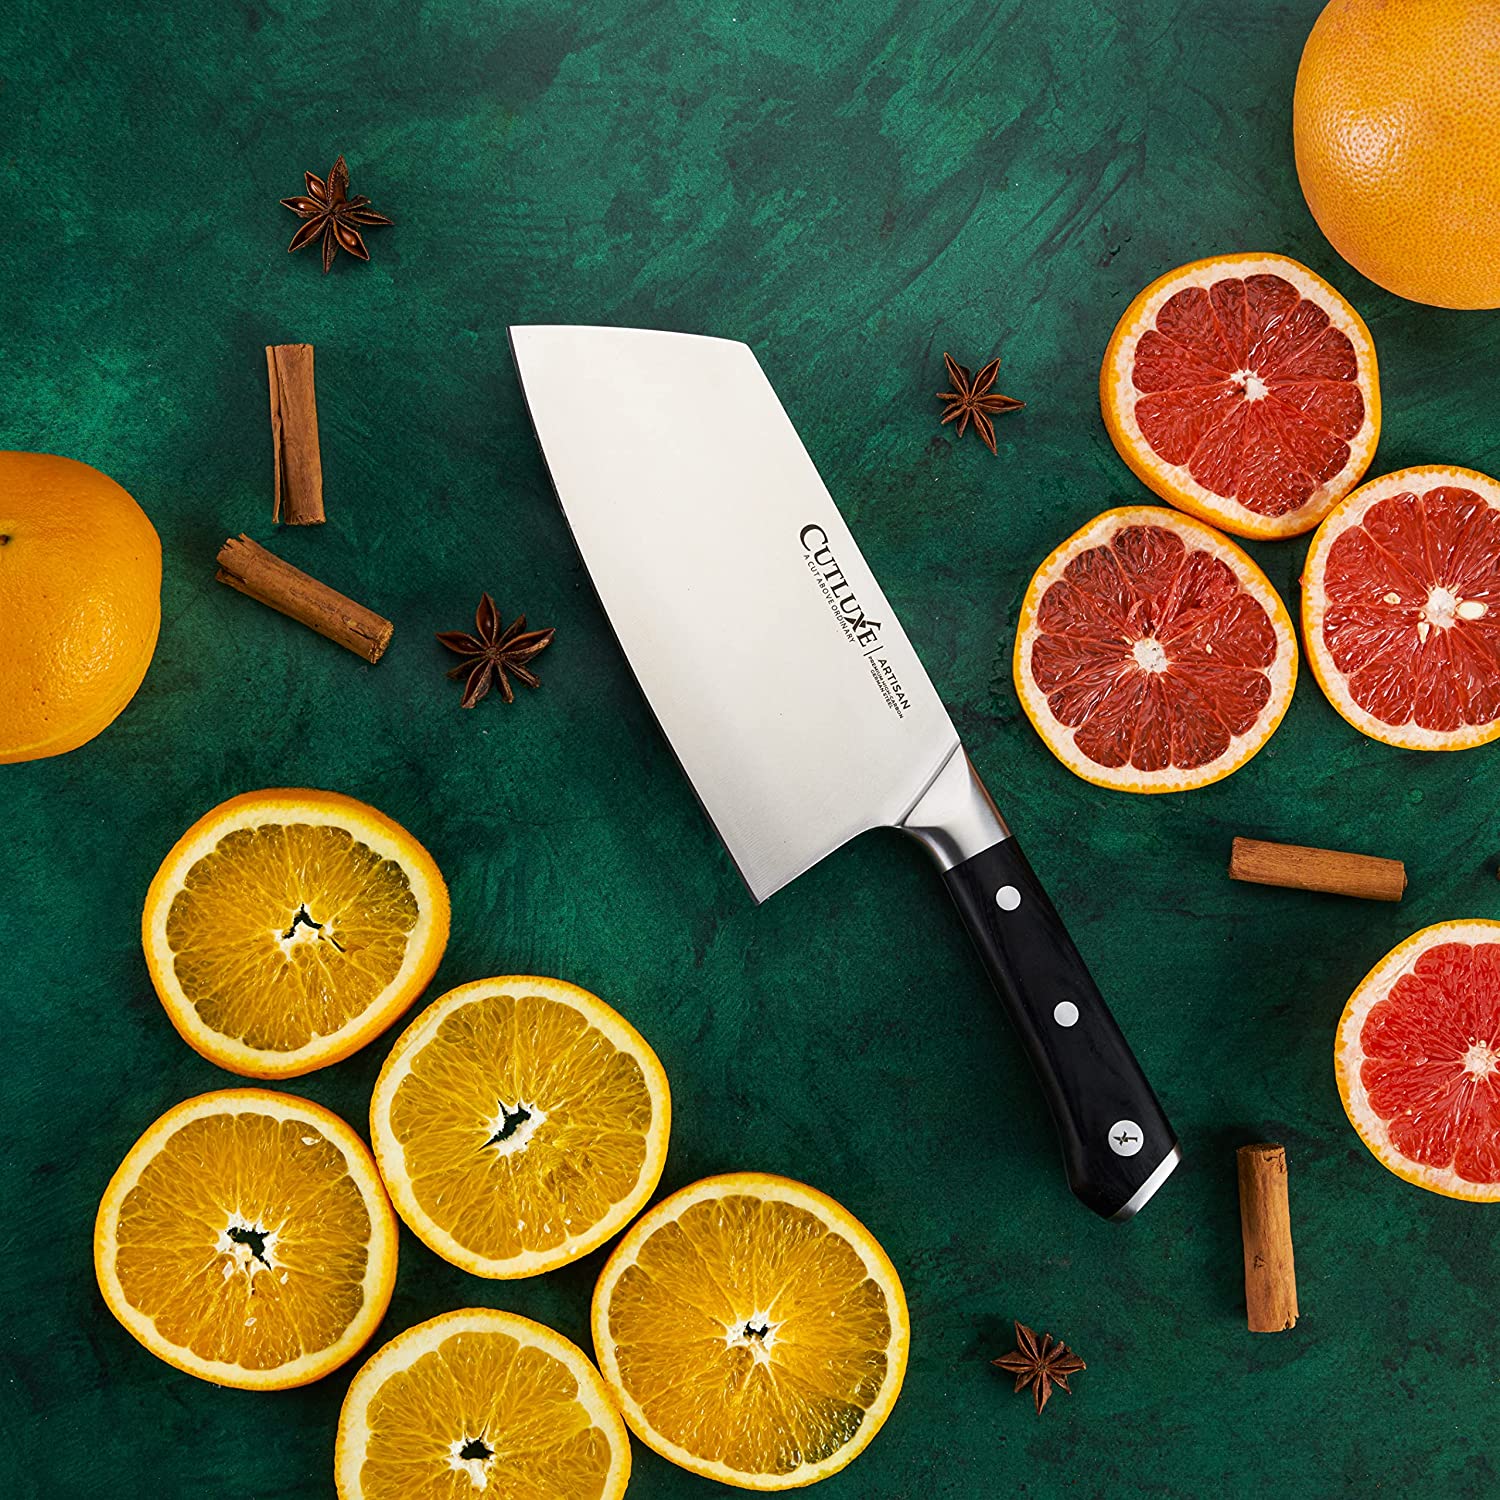 Cutluxe Cleaver Knife - 7 Meat Cleaver, Butcher Knife for Meat Cutting – Razor Sharp German Steel Blade – Full Tang Ergonomic Handle Design –